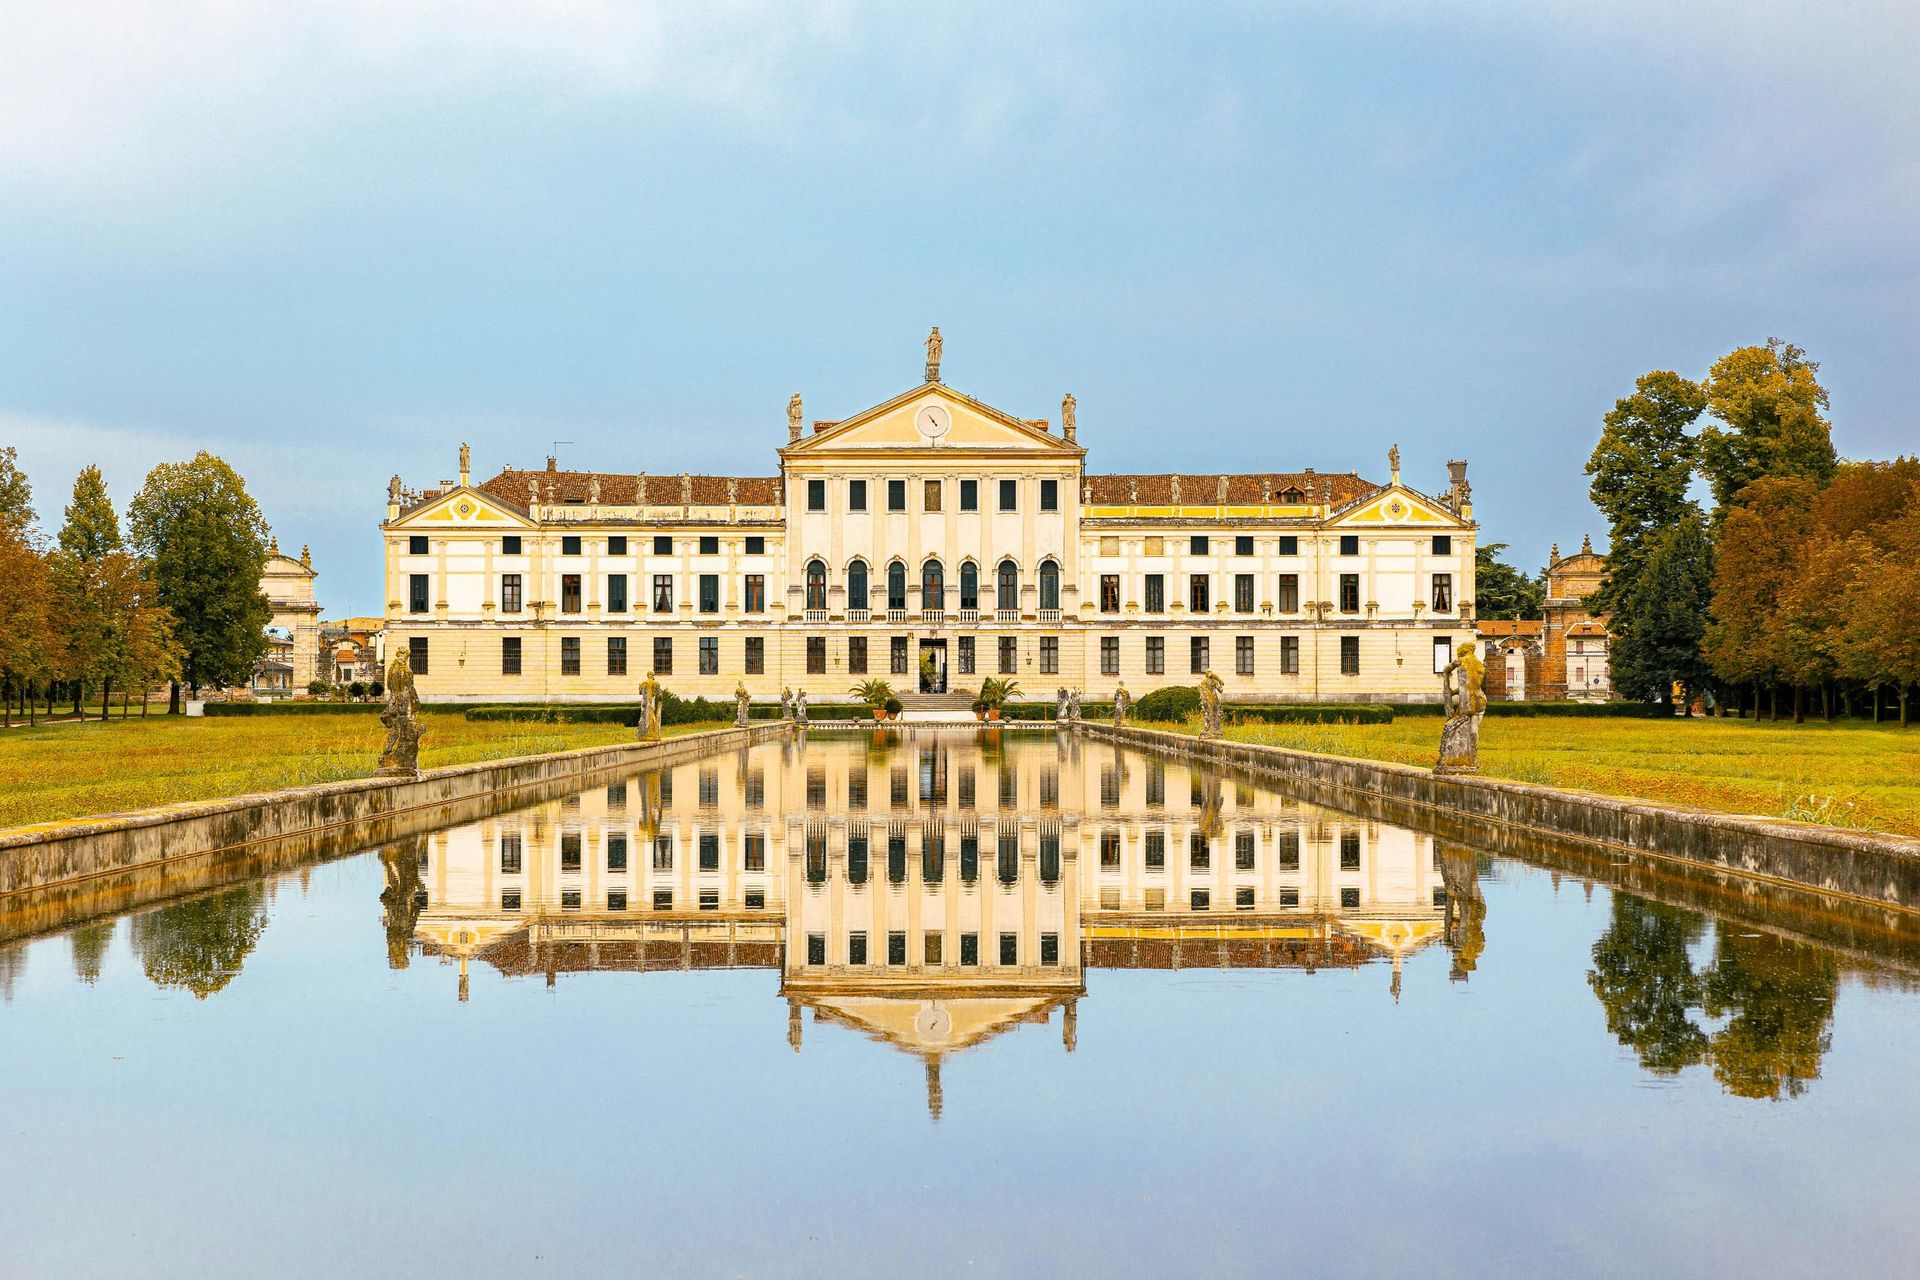 Renaissance Gardens in the Veneto Region